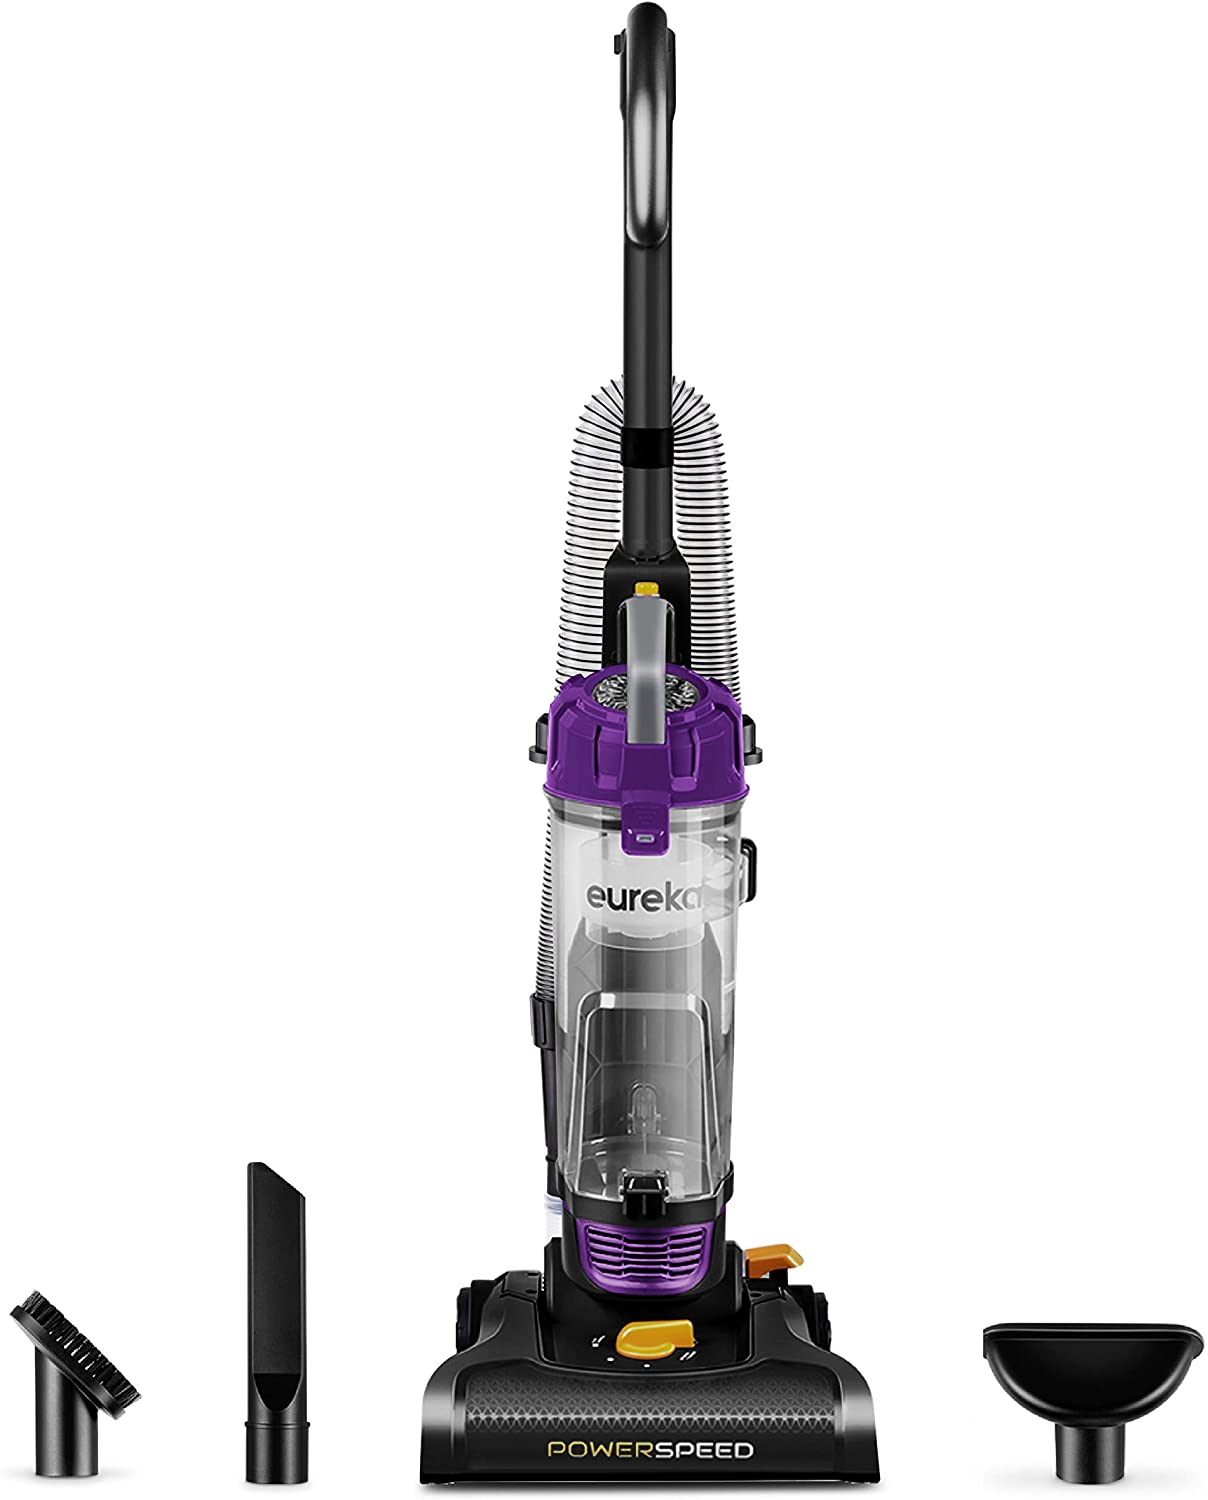 Eureka NEU182B PowerSpeed Bagless Upright Vacuum Cleaner, Purple - image 1 of 3